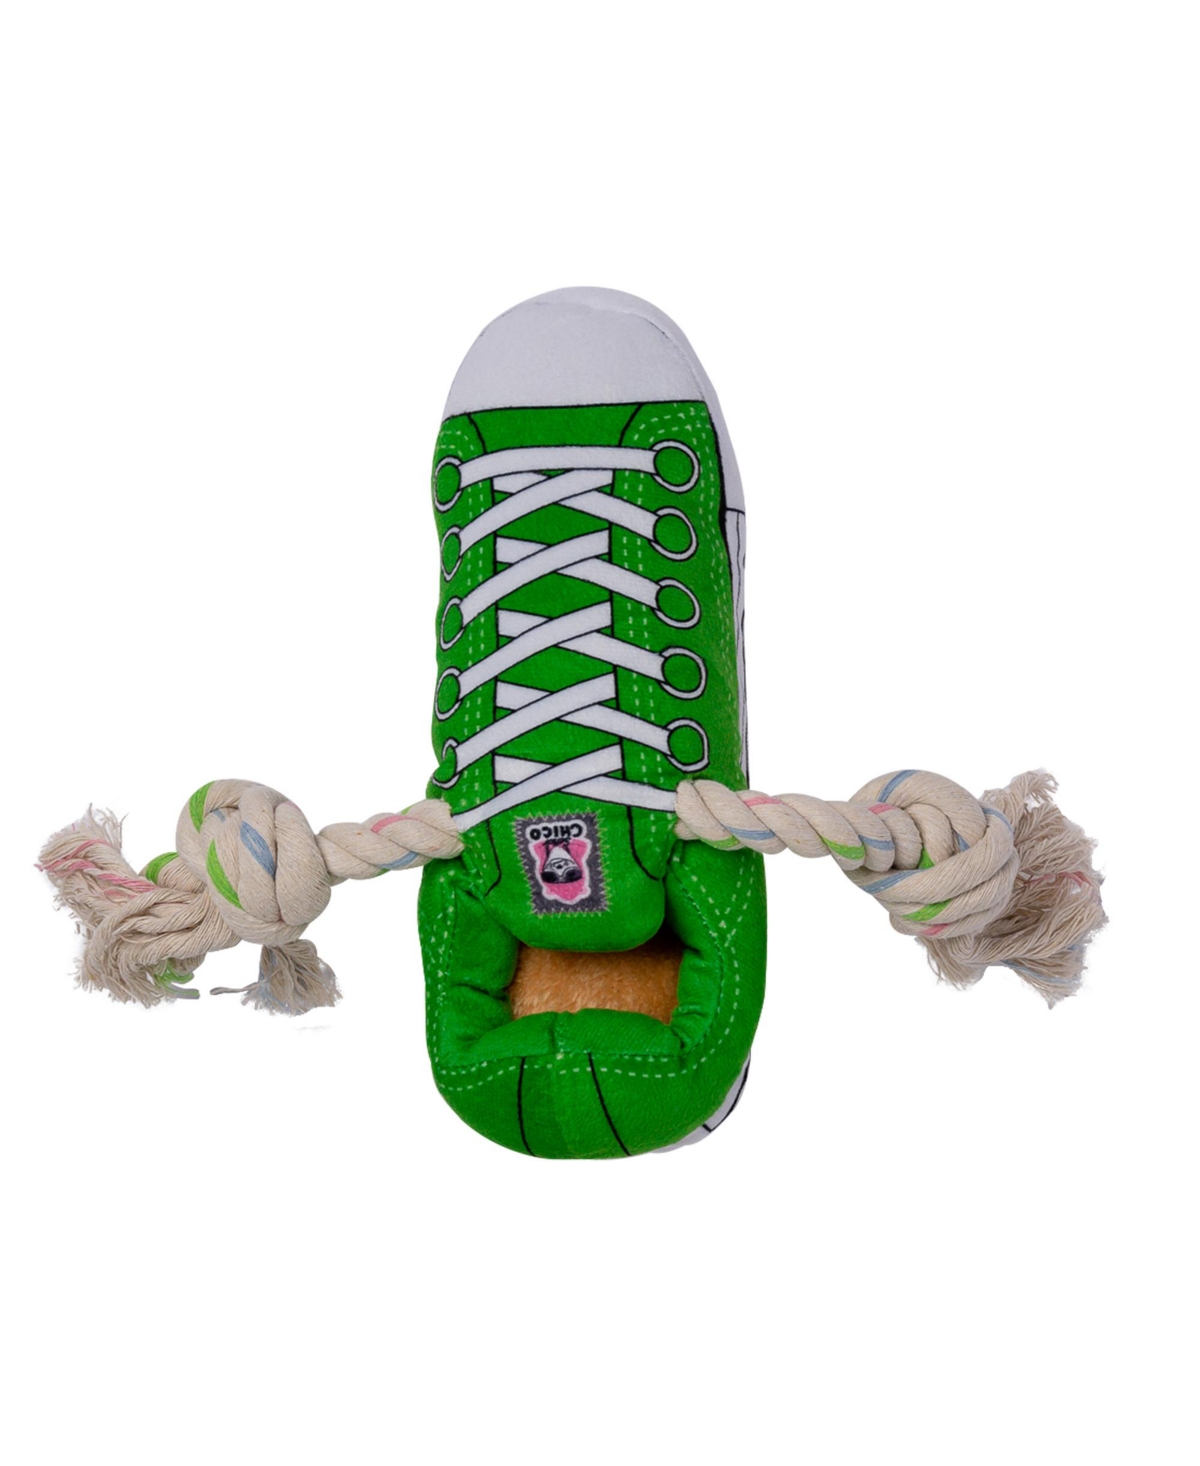 Squeaking Comfort Plush Sneaker Dog Chew Toy - Green - Green